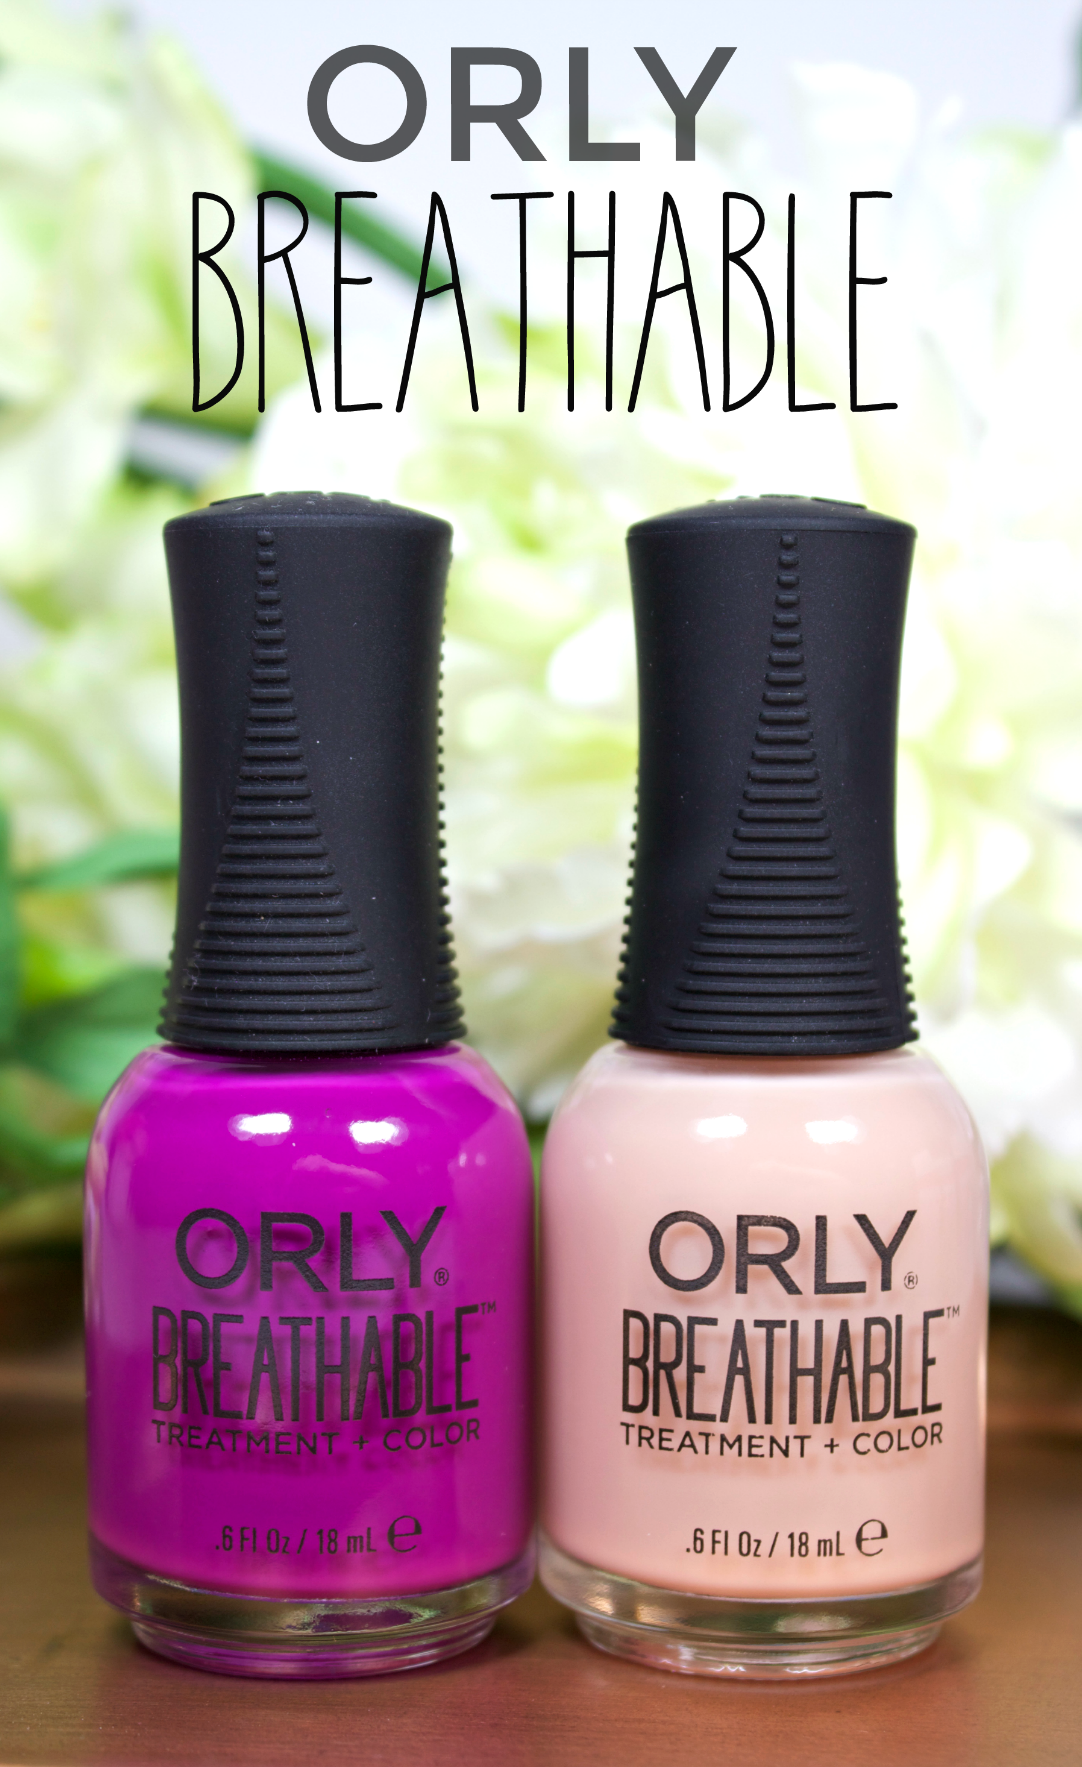 NEW! Orly Breathable Treatment + Color Nail Polish